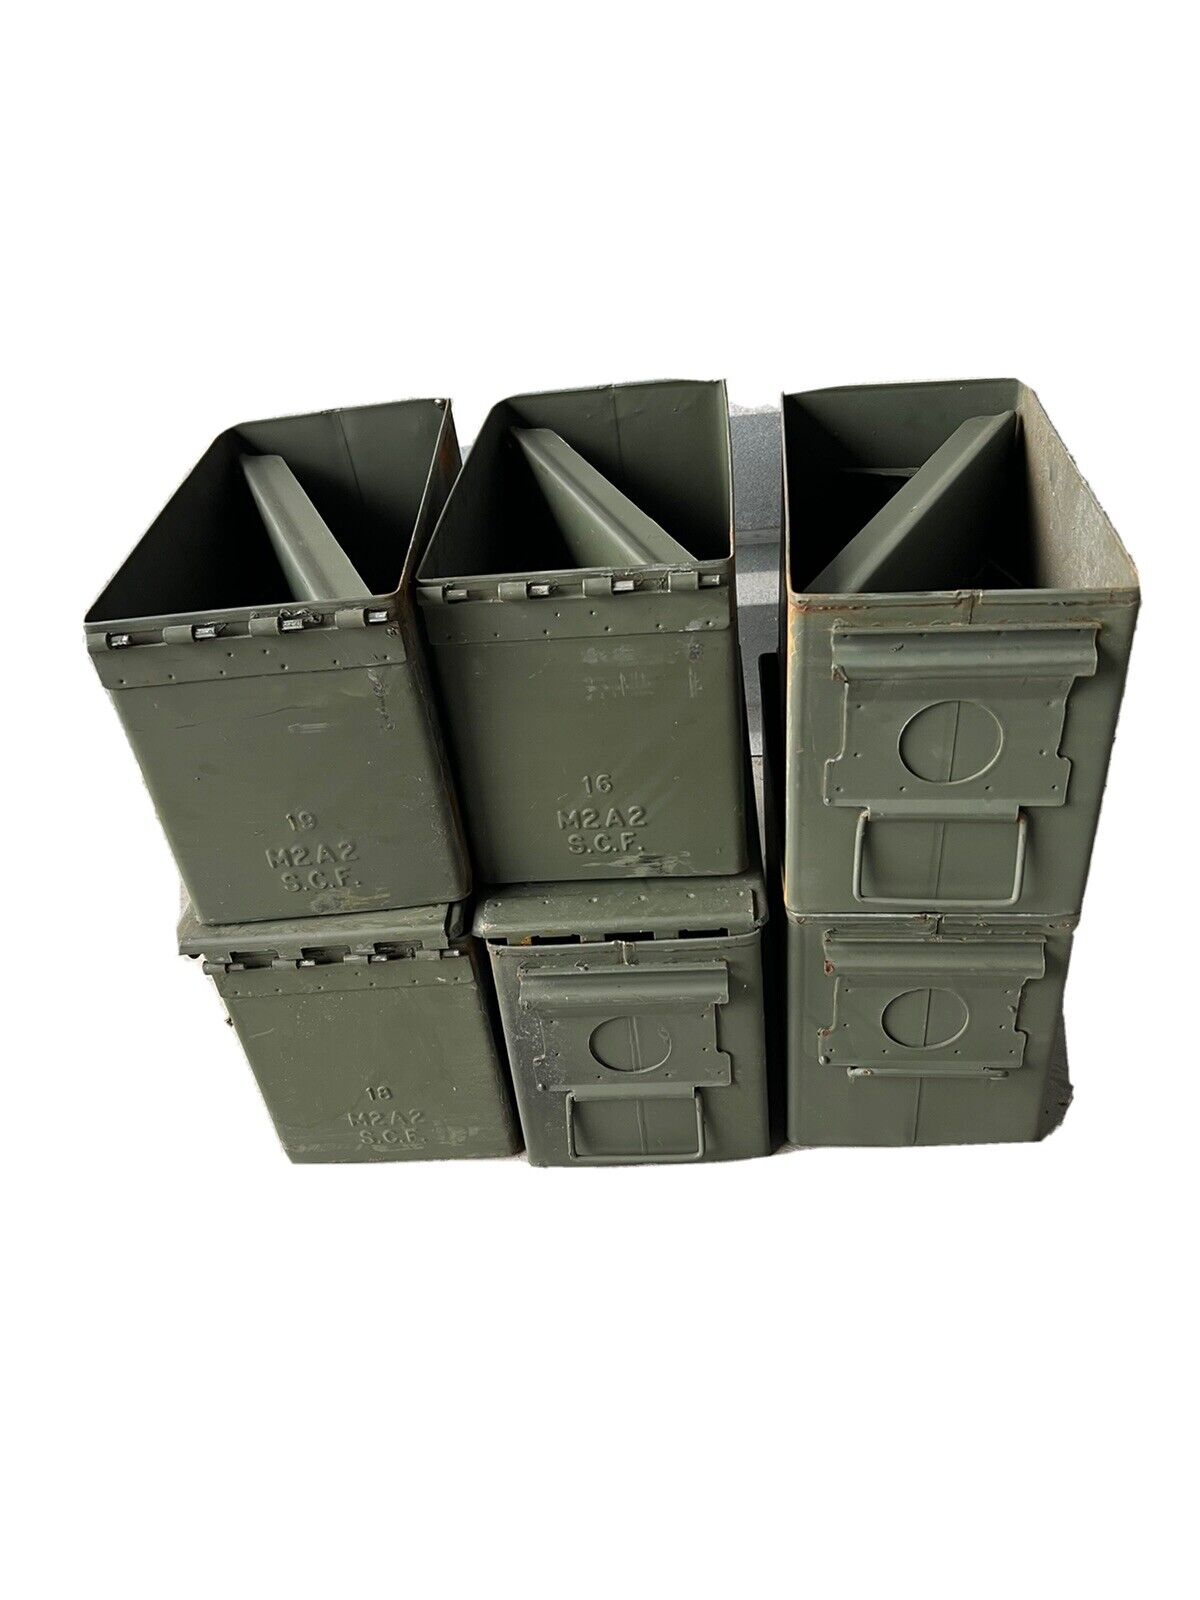 6 Packs x Original .50 CALIBER 5.56mm AMMO CAN M2A1 50CAL METAL AMMO CAN BOX